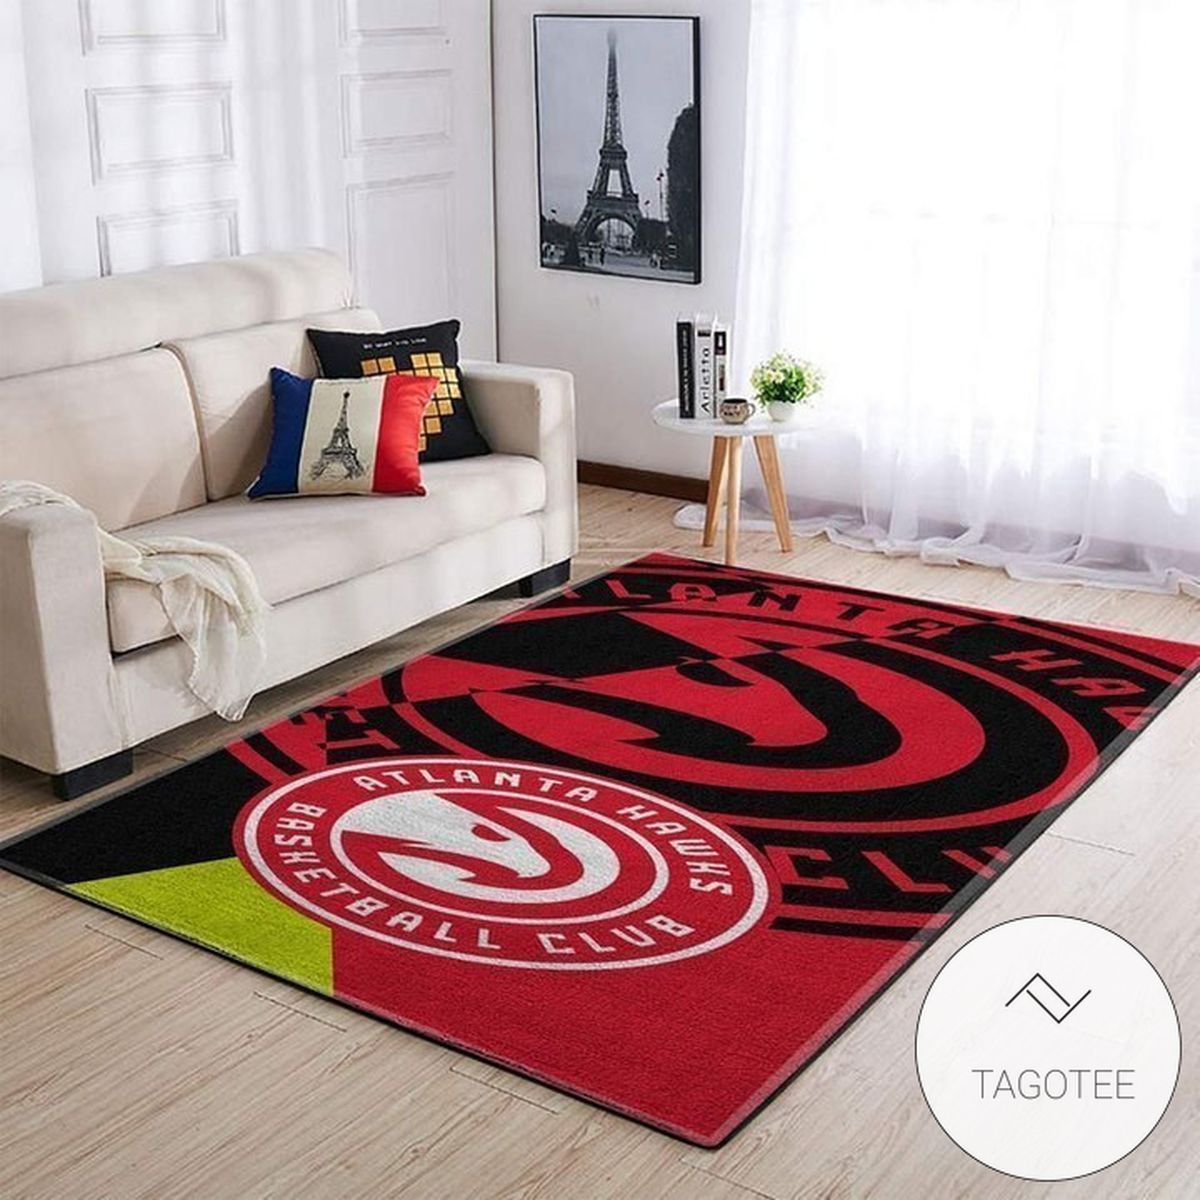 Atlanta Hawks Area Rug NBA Basketball Team Logo Carpet Living Room Rugs Floor Decor 200327